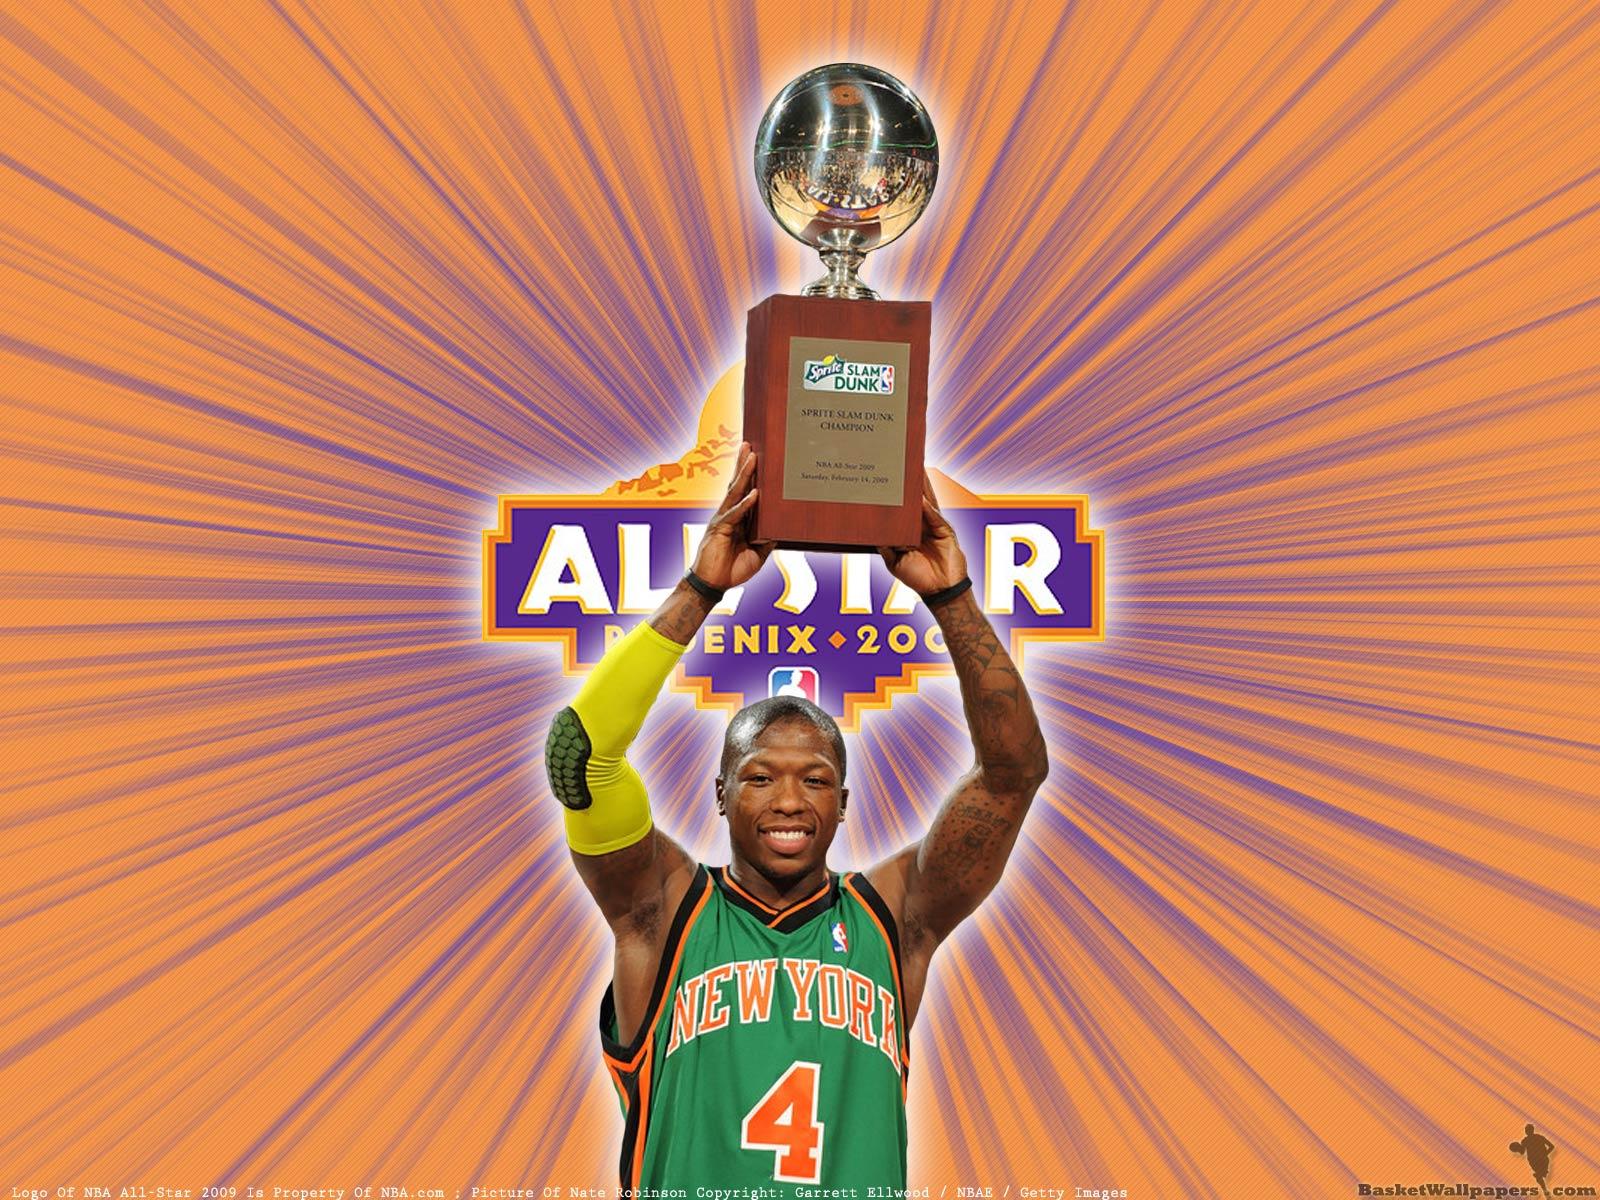 Nate Robinson 2009 Slam Dunk Champion Wallpaper. Basketball